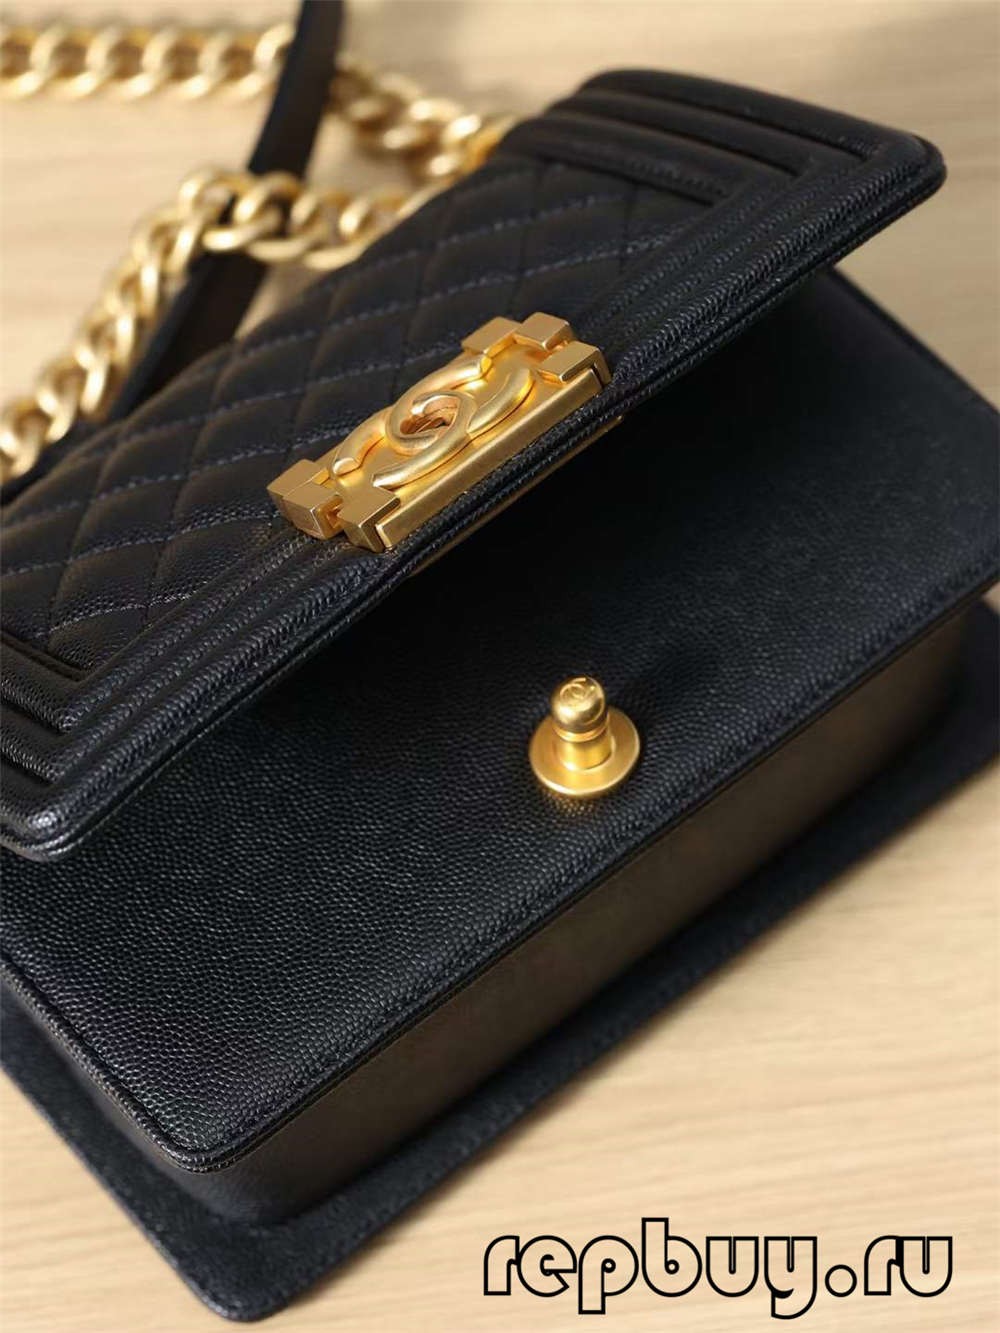 Chanel Le boy top replica handbags small gold buckle latch detail (2022 Updated)-Best Quality Fake Louis Vuitton Bag Online Store, Replica designer bag ru